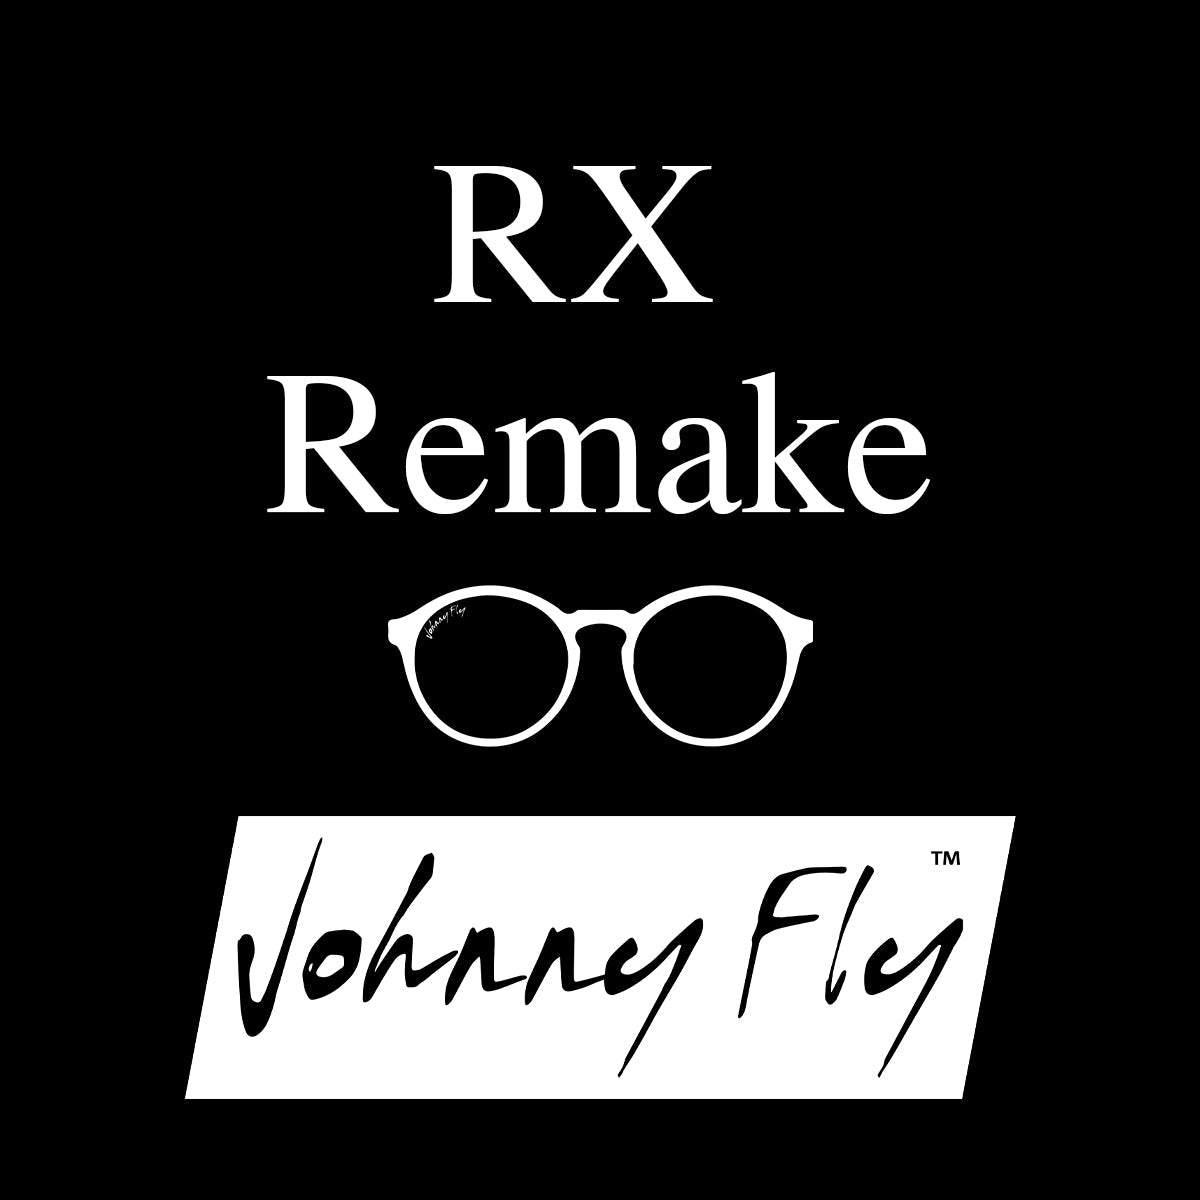 RX Remake / Redo (Place original order number in notes)